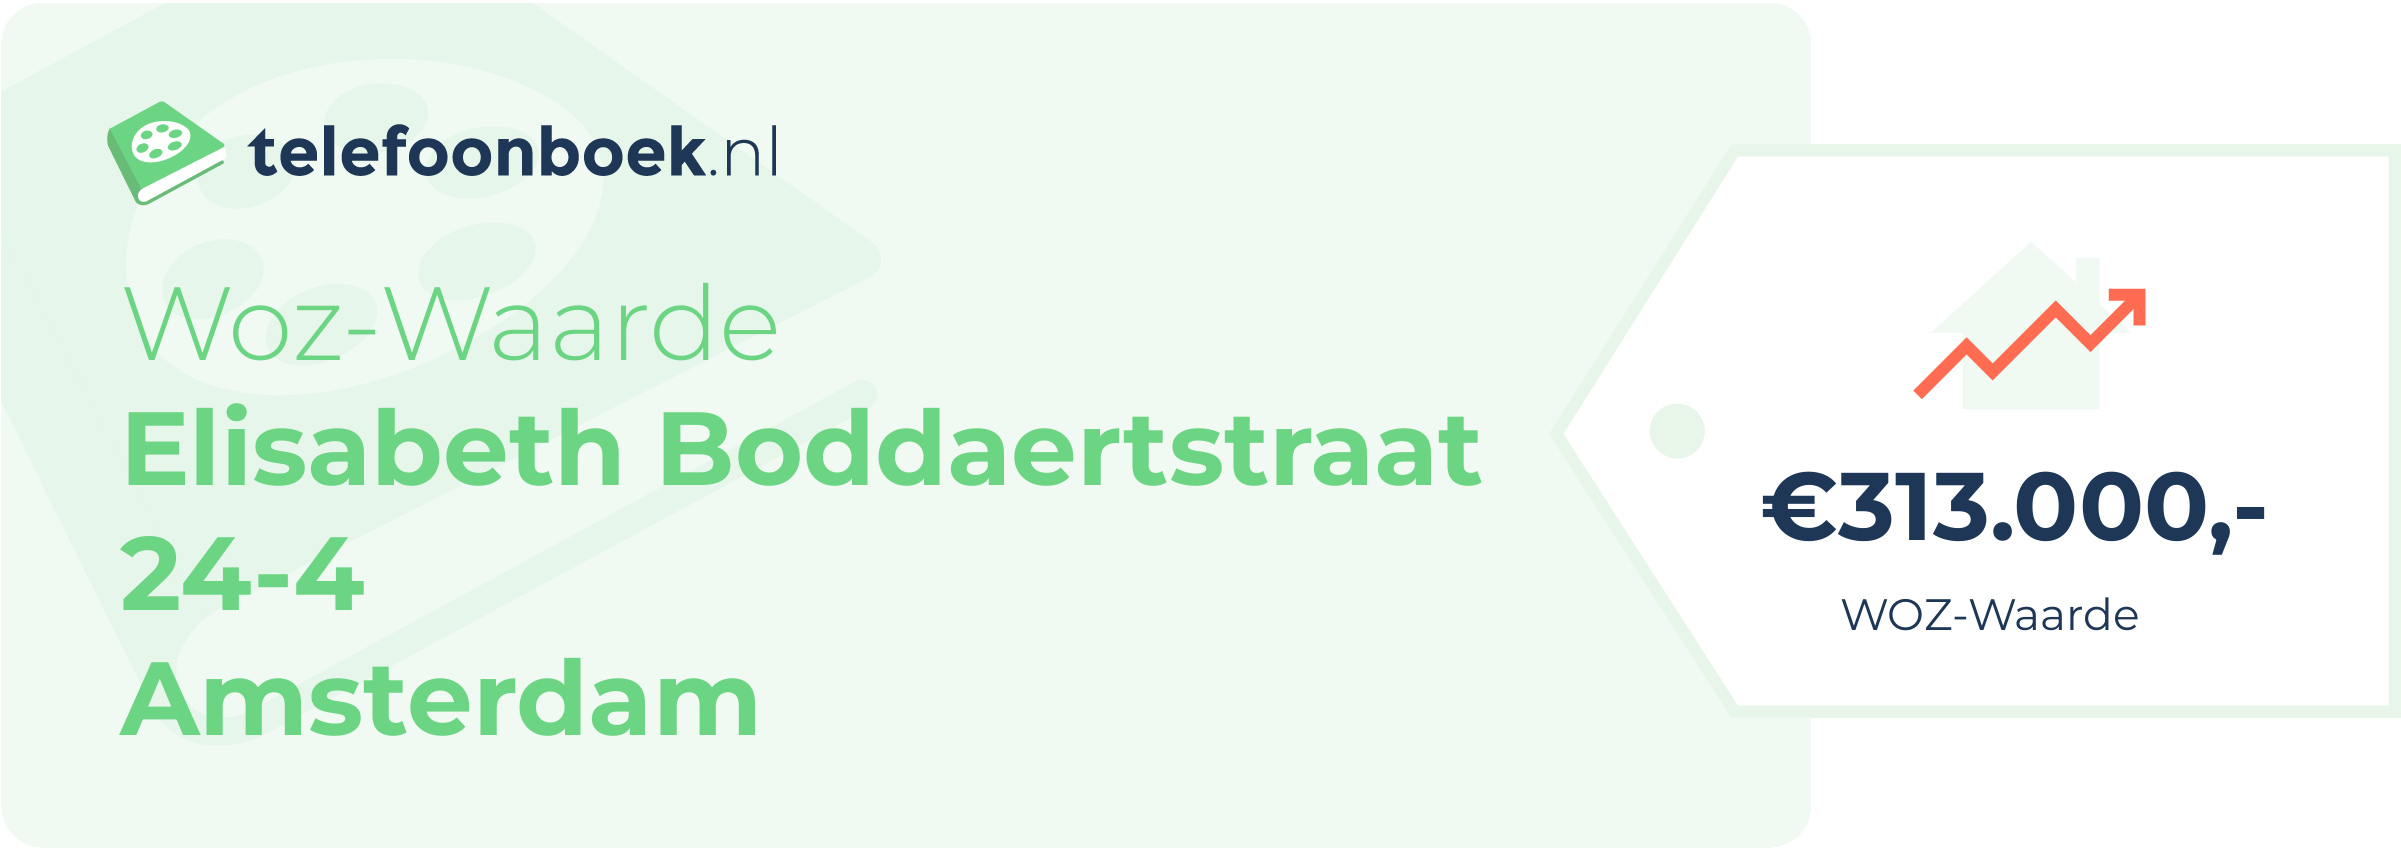 WOZ-waarde Elisabeth Boddaertstraat 24-4 Amsterdam